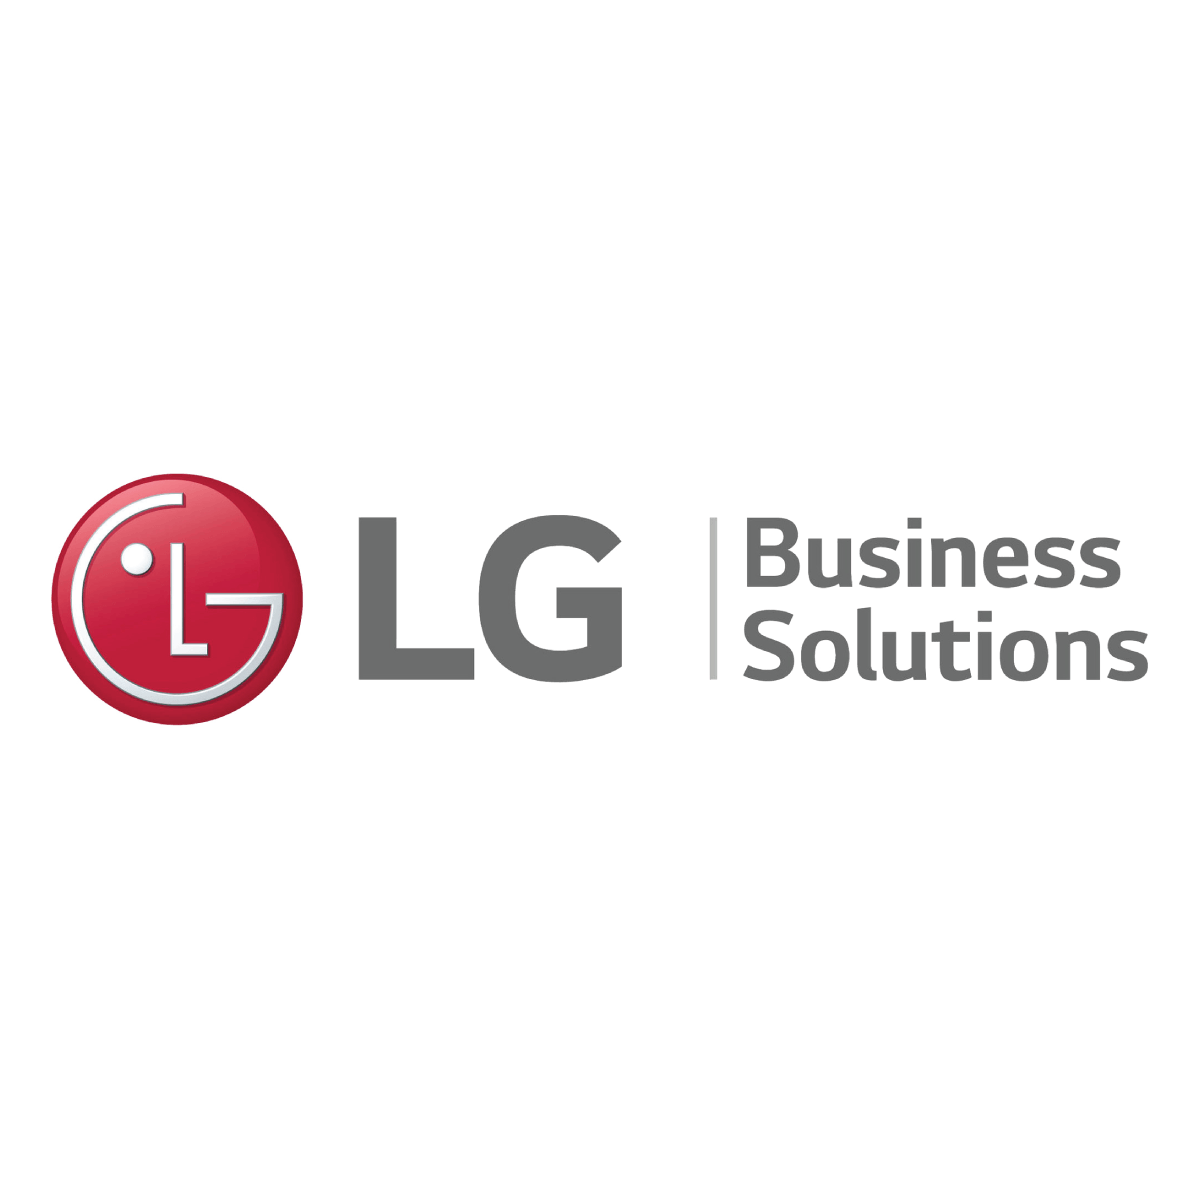 LG Business Solutions partner logo